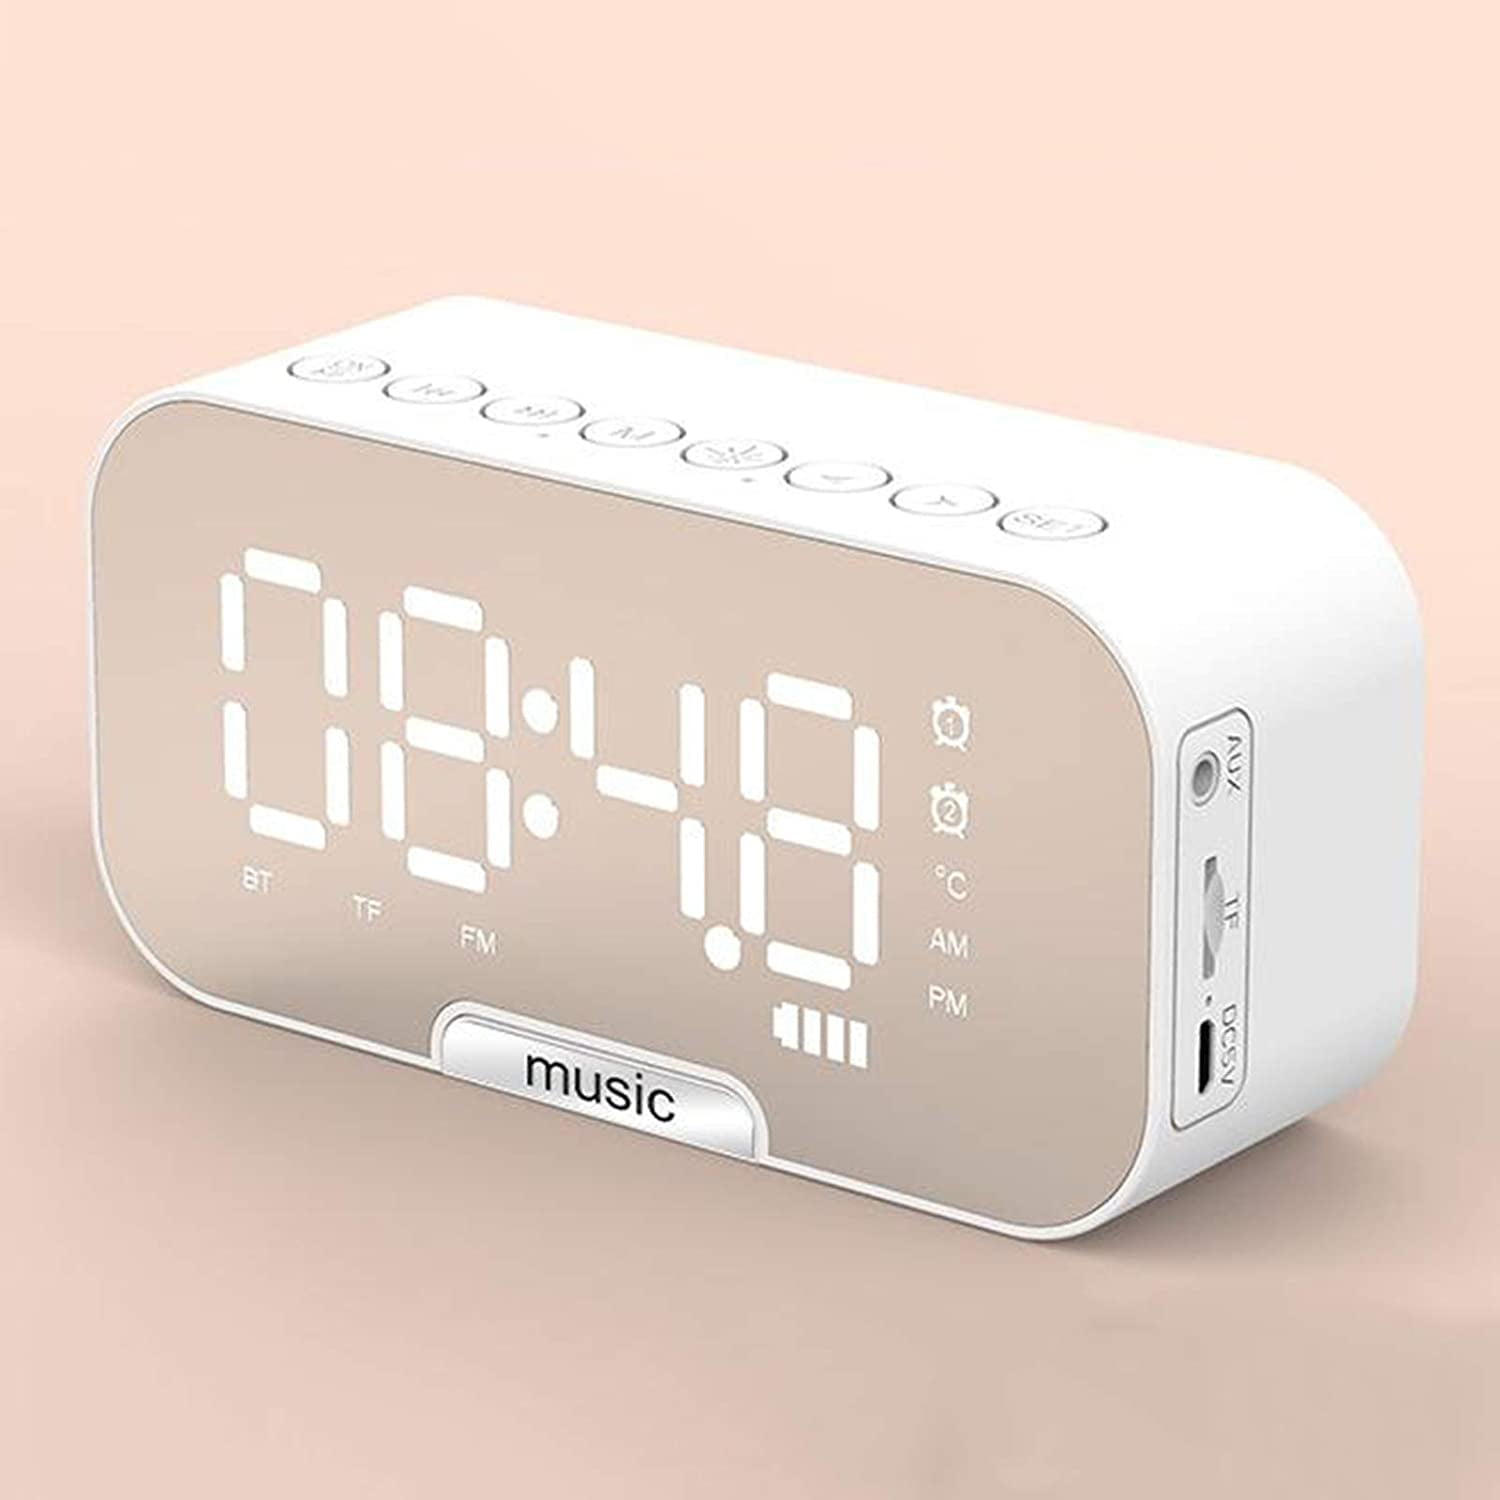 Digital clock radio alarm - batmanforward